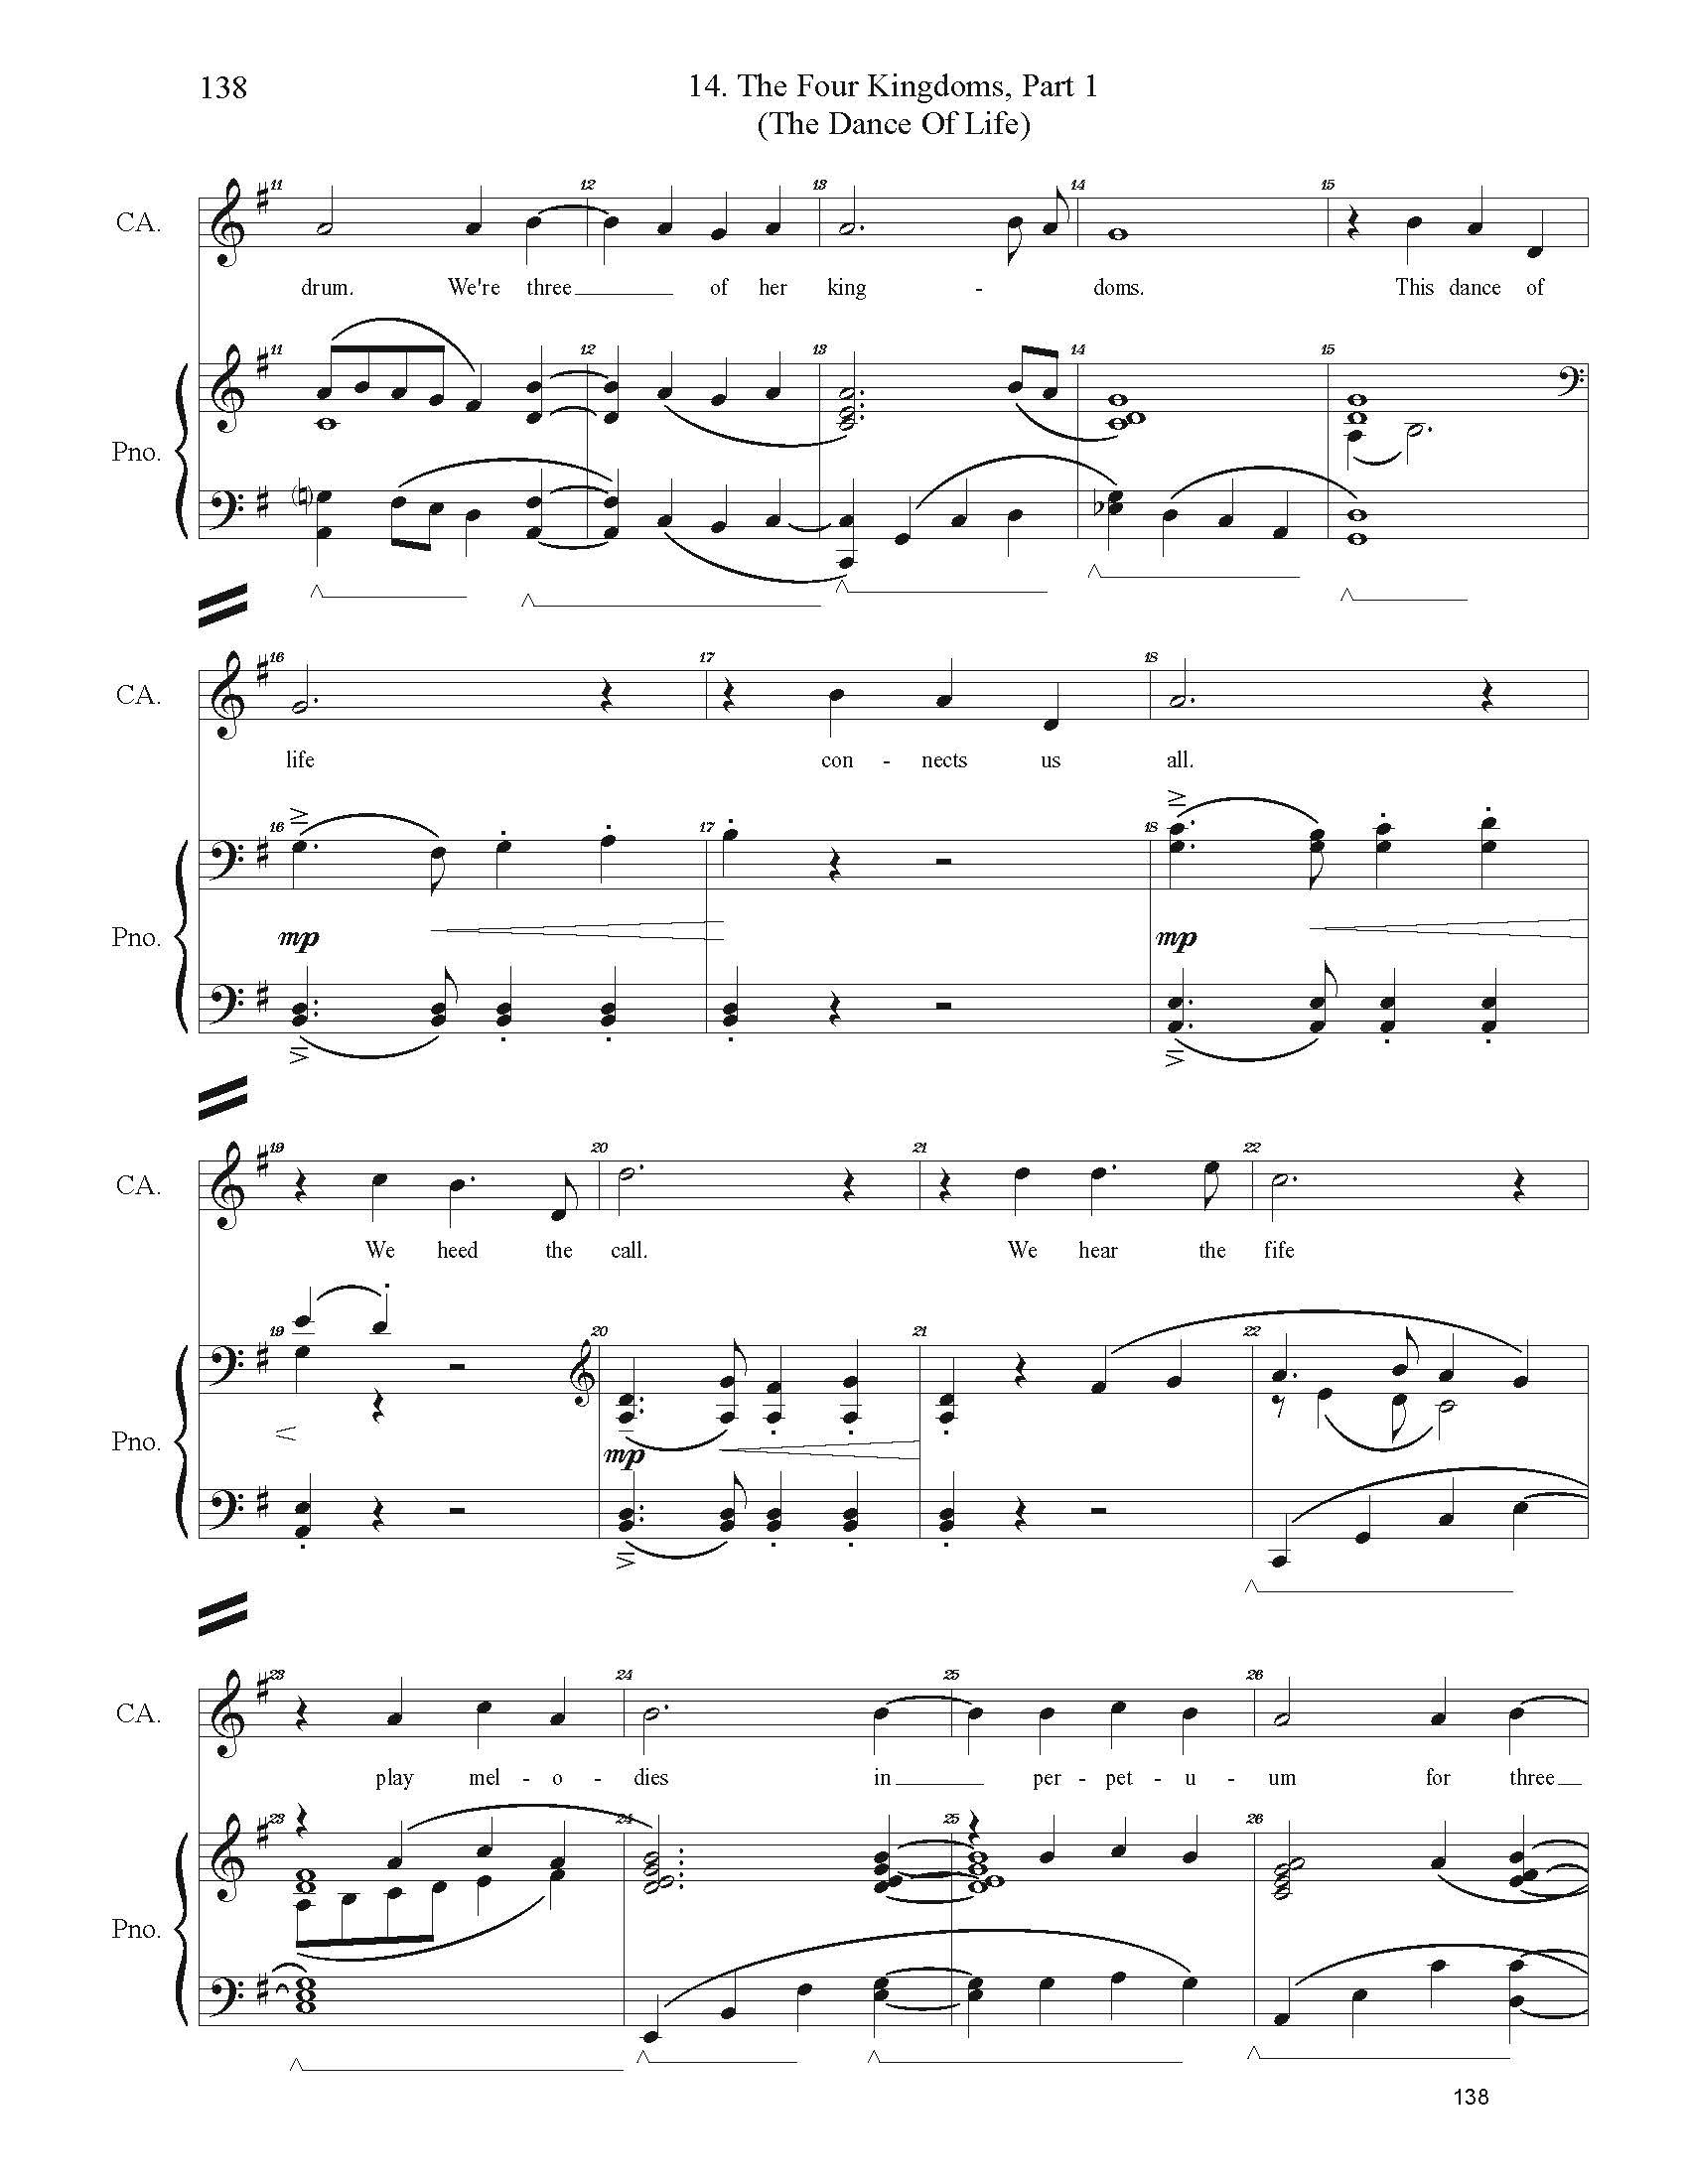 FULL PIANO VOCAL SCORE DRAFT 1 - Score_Page_138.jpg